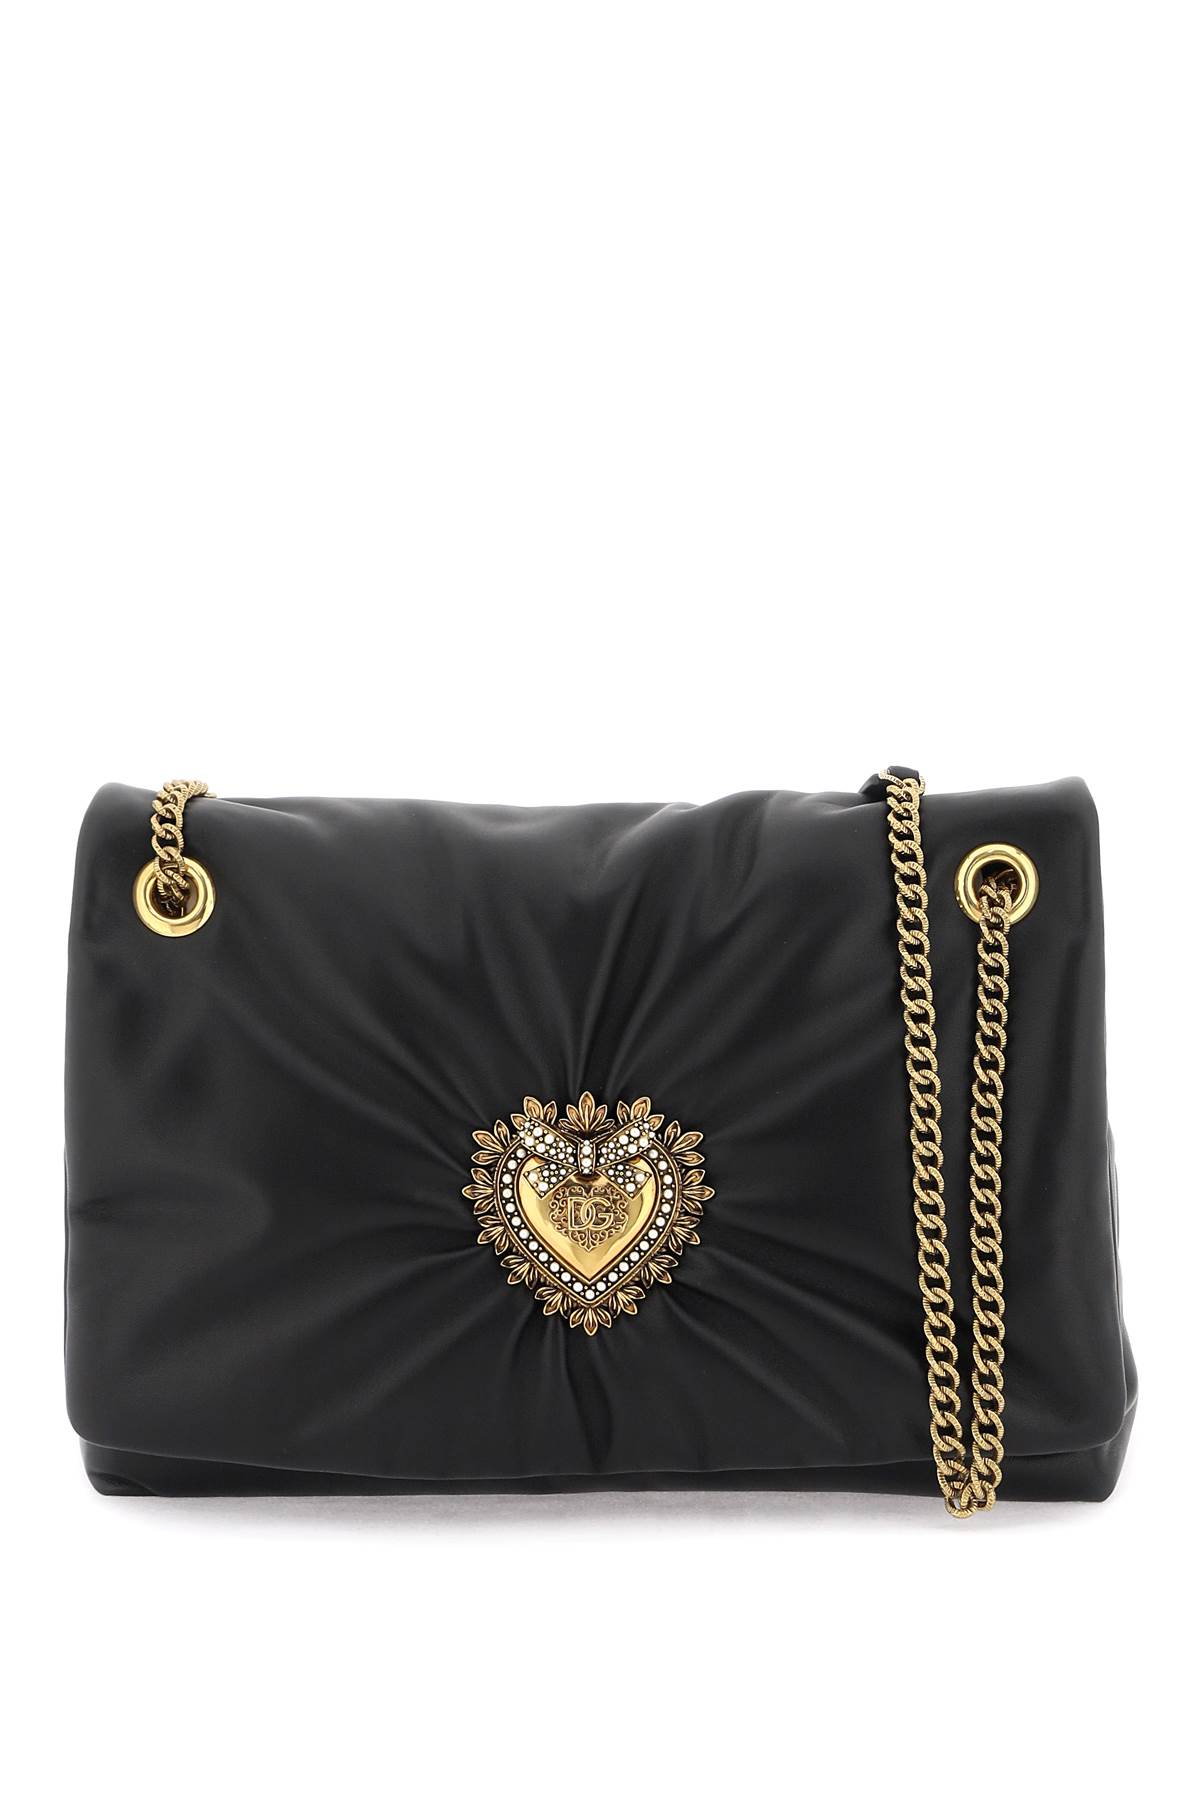 Dolce & Gabbana Devotion Large Shoulder Bag In Nappa Leather In Nero